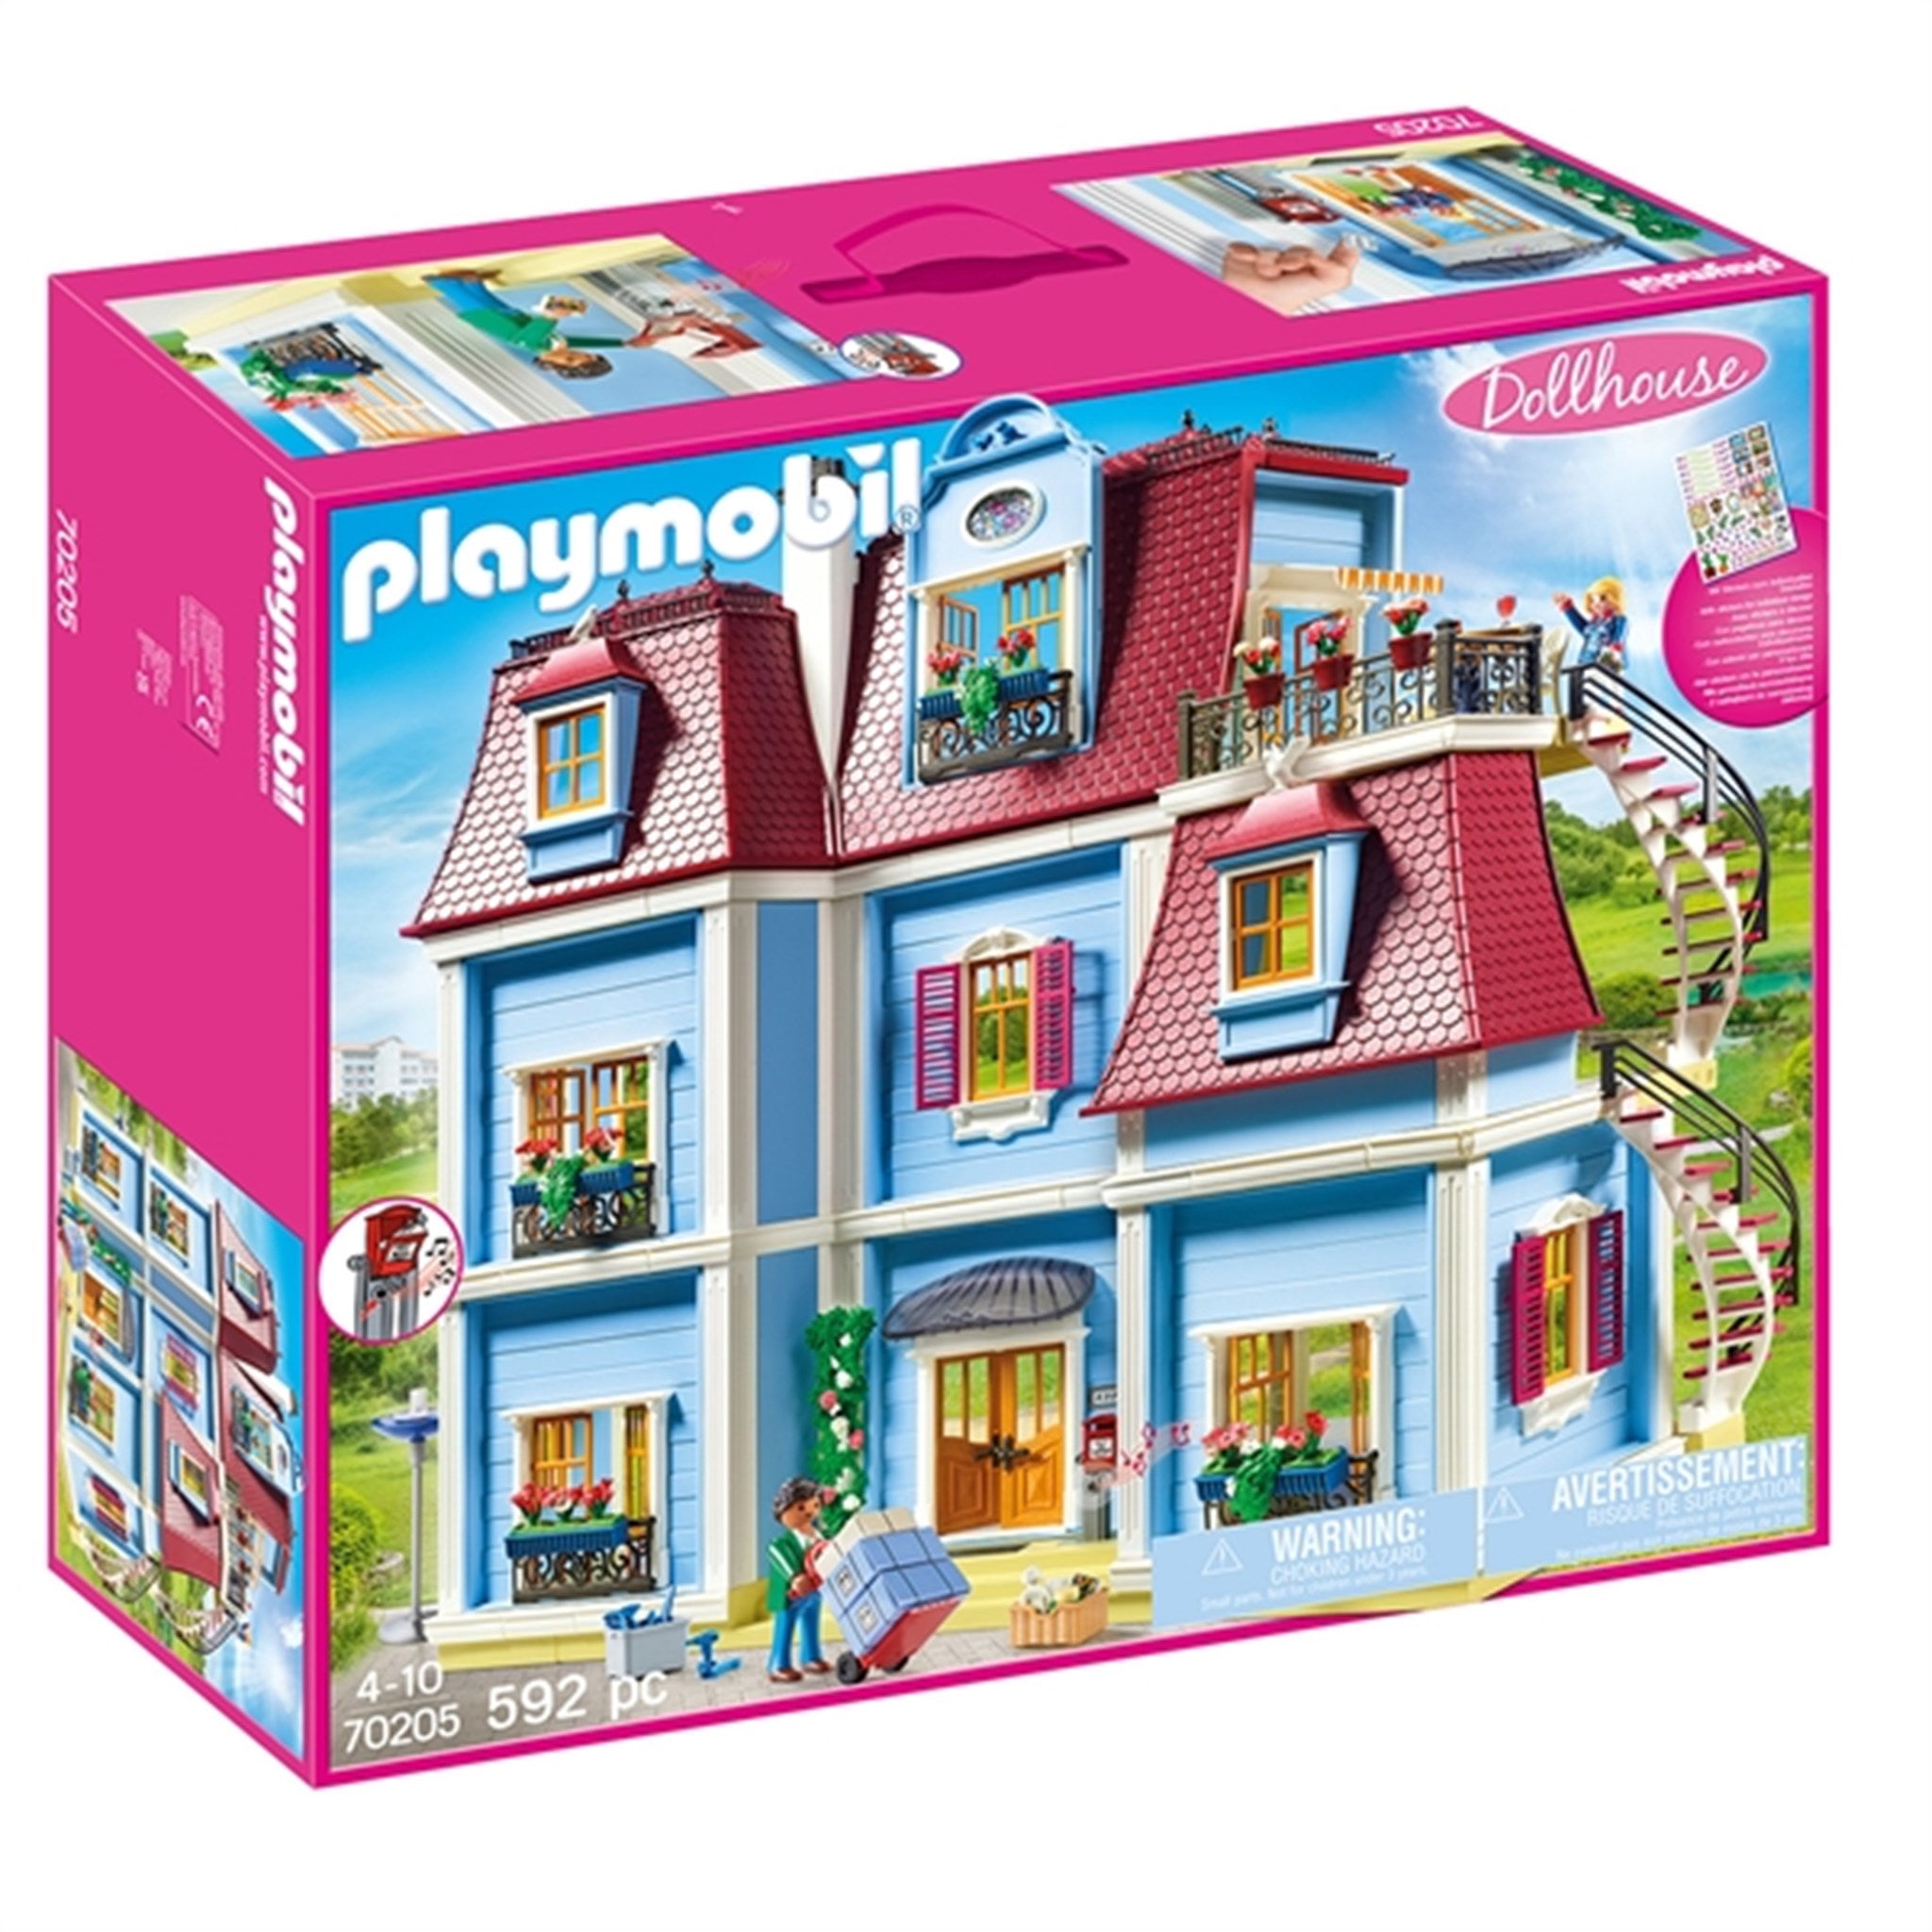 Playmobil® Dollhouse - Dukkehus